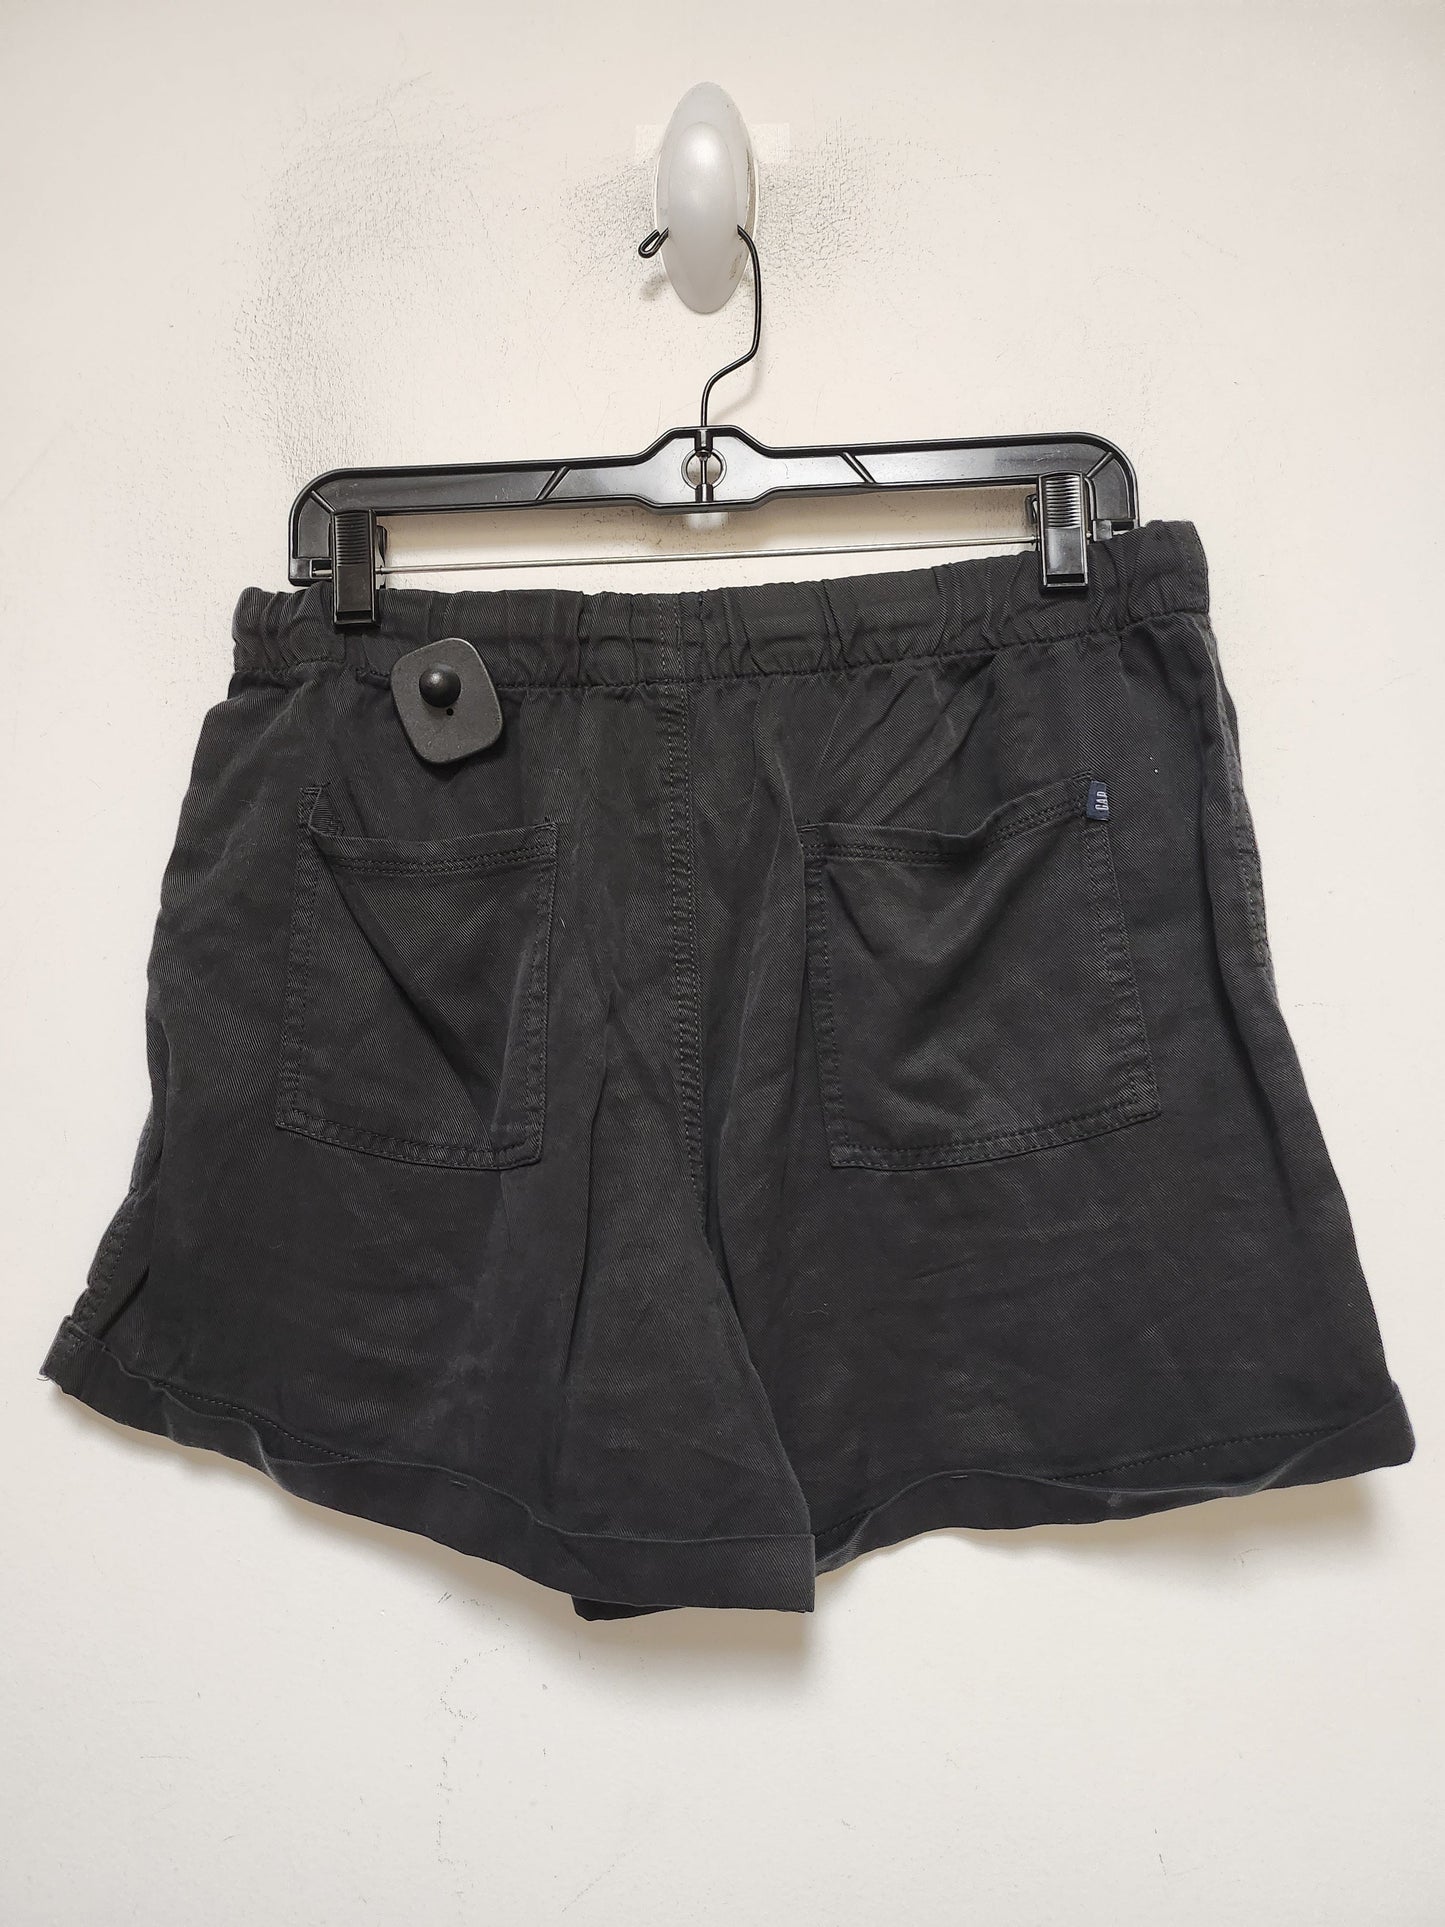 Grey Shorts Gap, Size 4